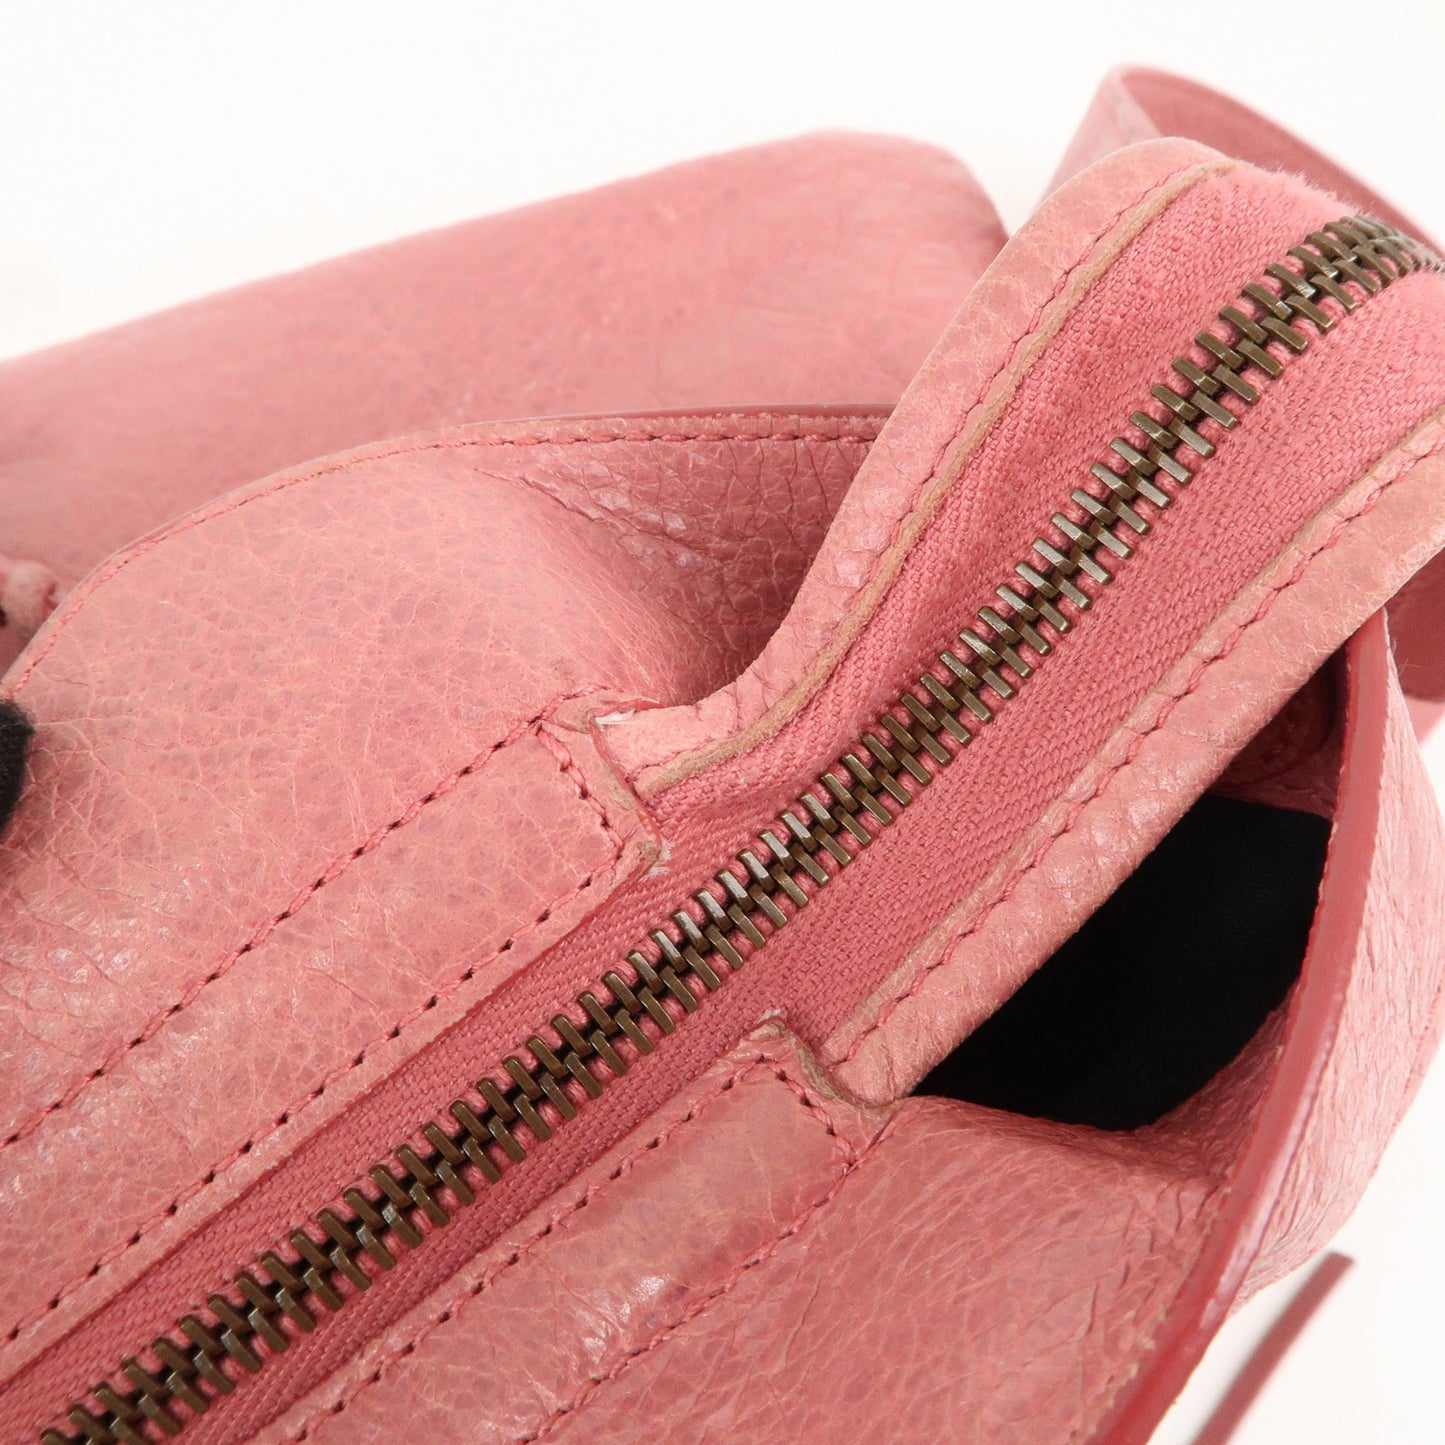 BALENCIAGA The Town Leather 2way Bag Hand Bag Pink 240579